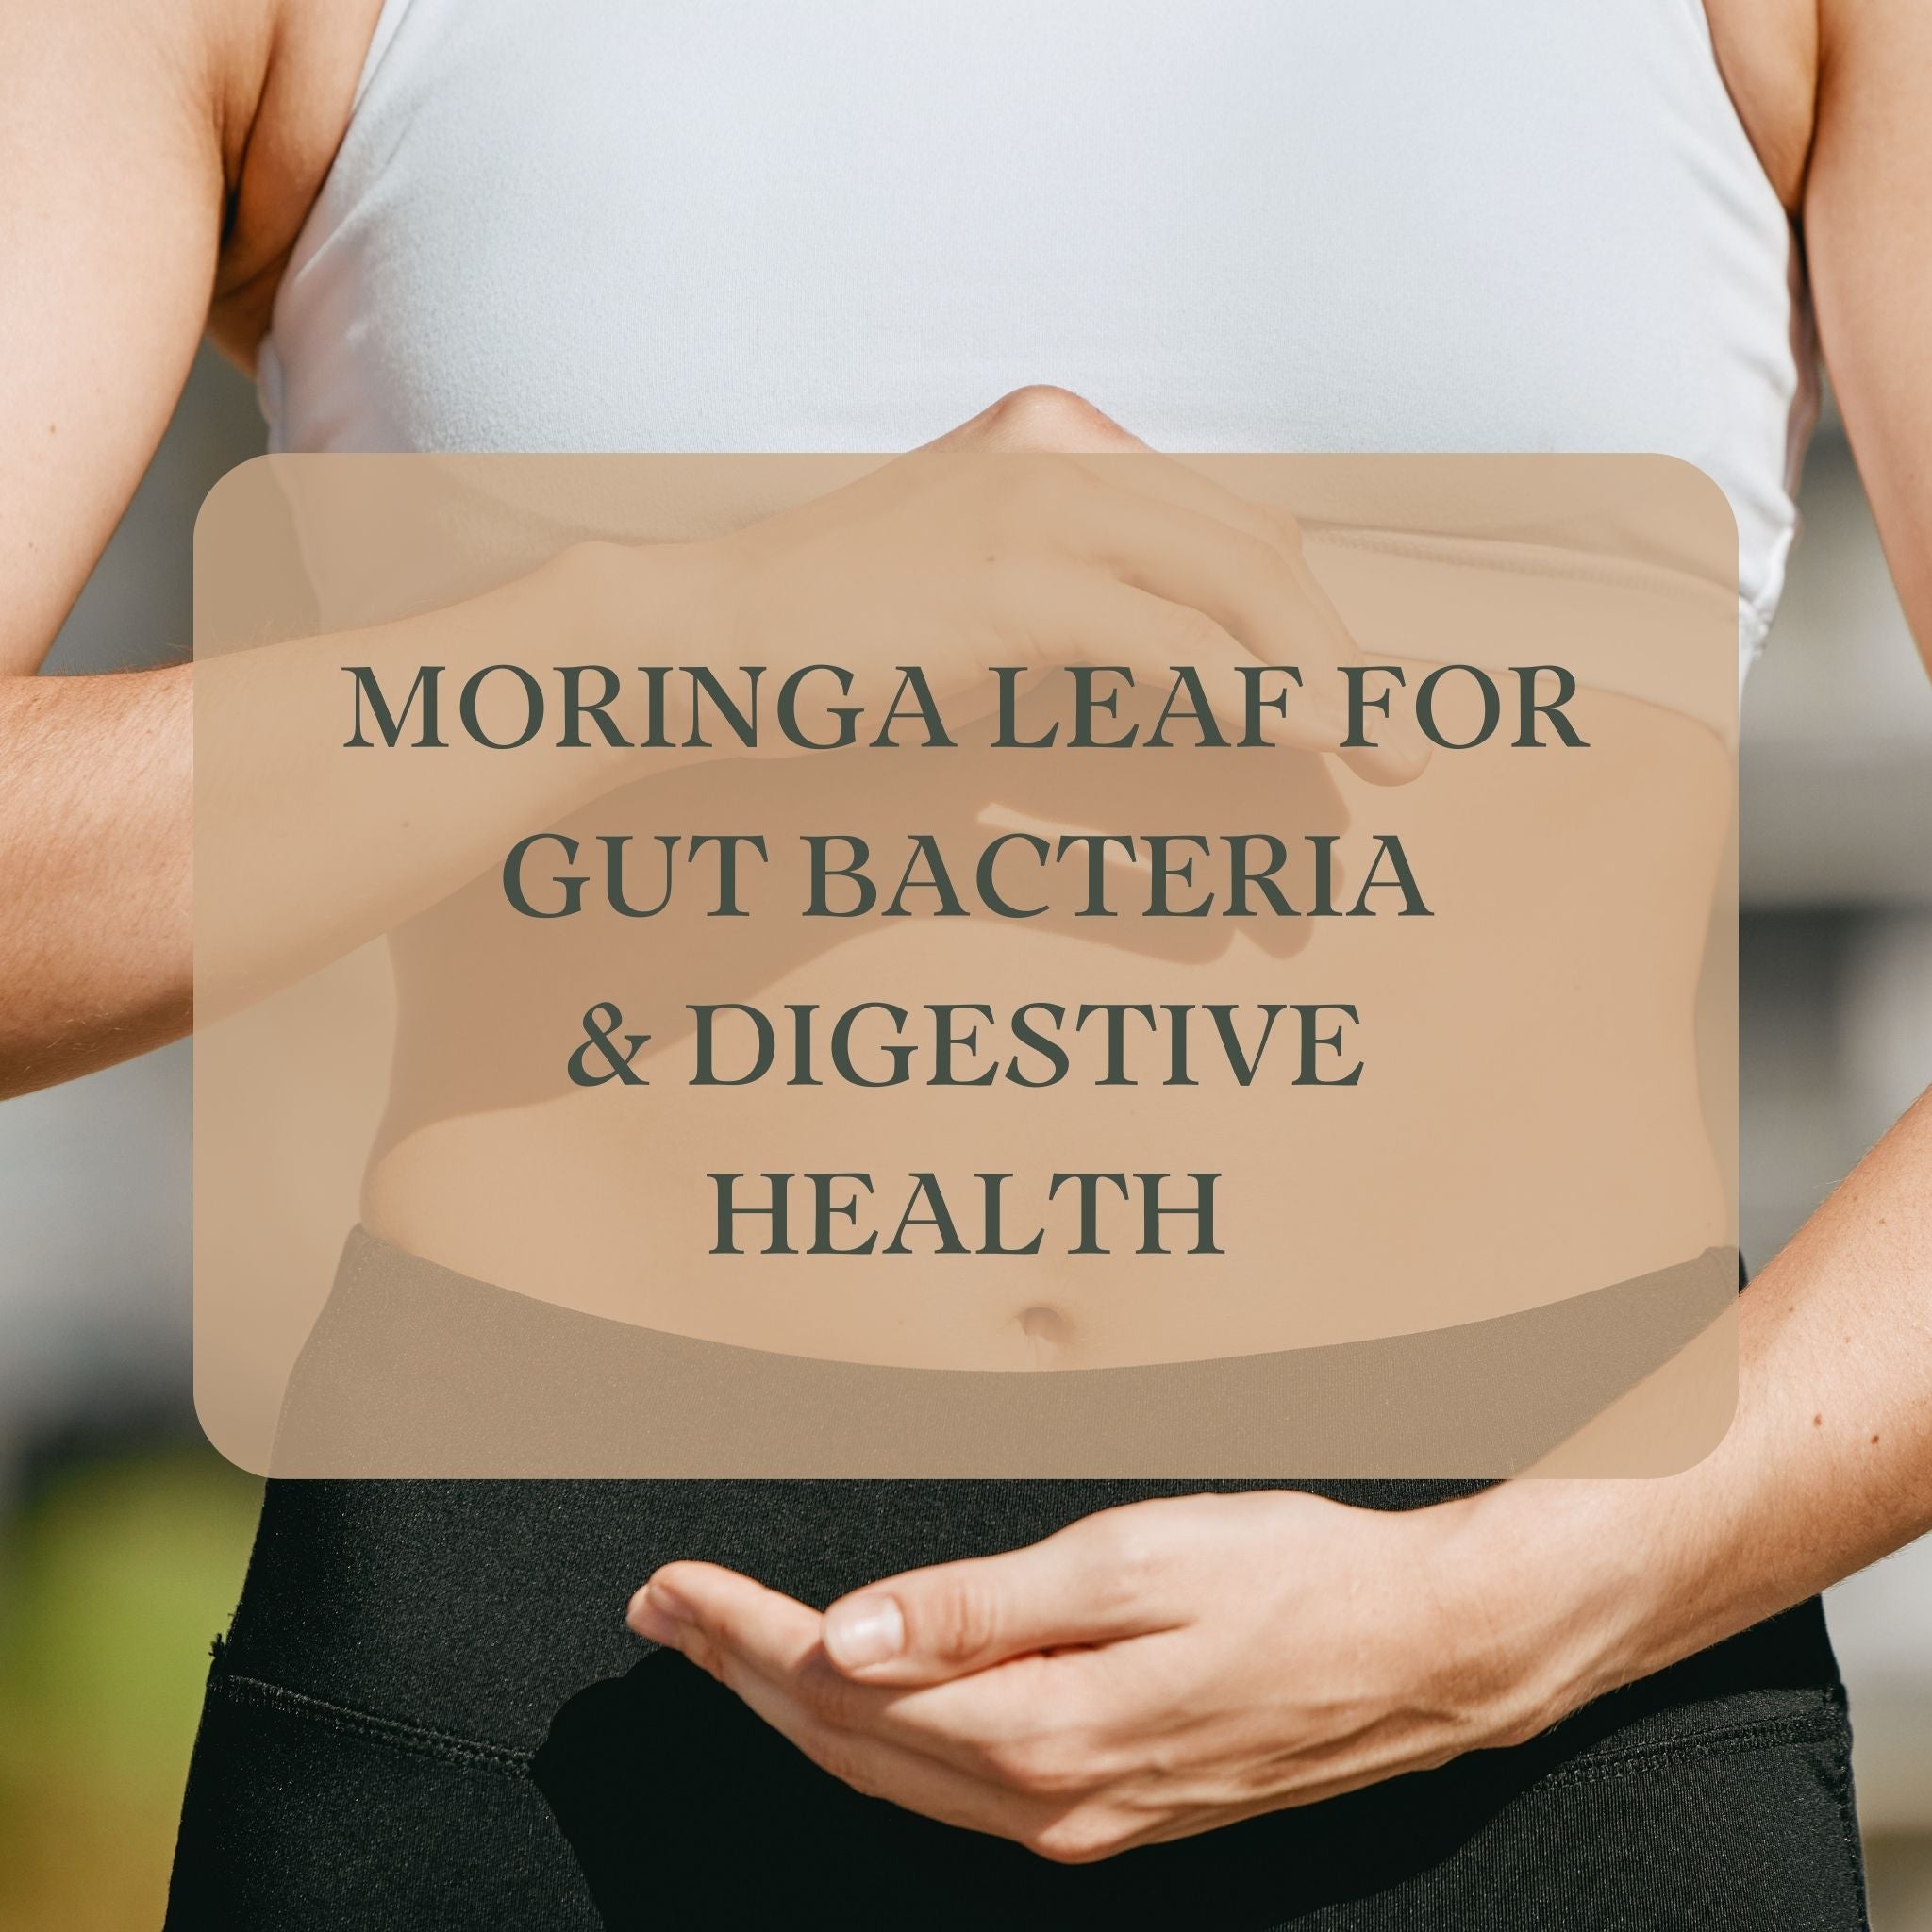 Moringa Leaf Powder Improves Gat Bacteria and Digestive